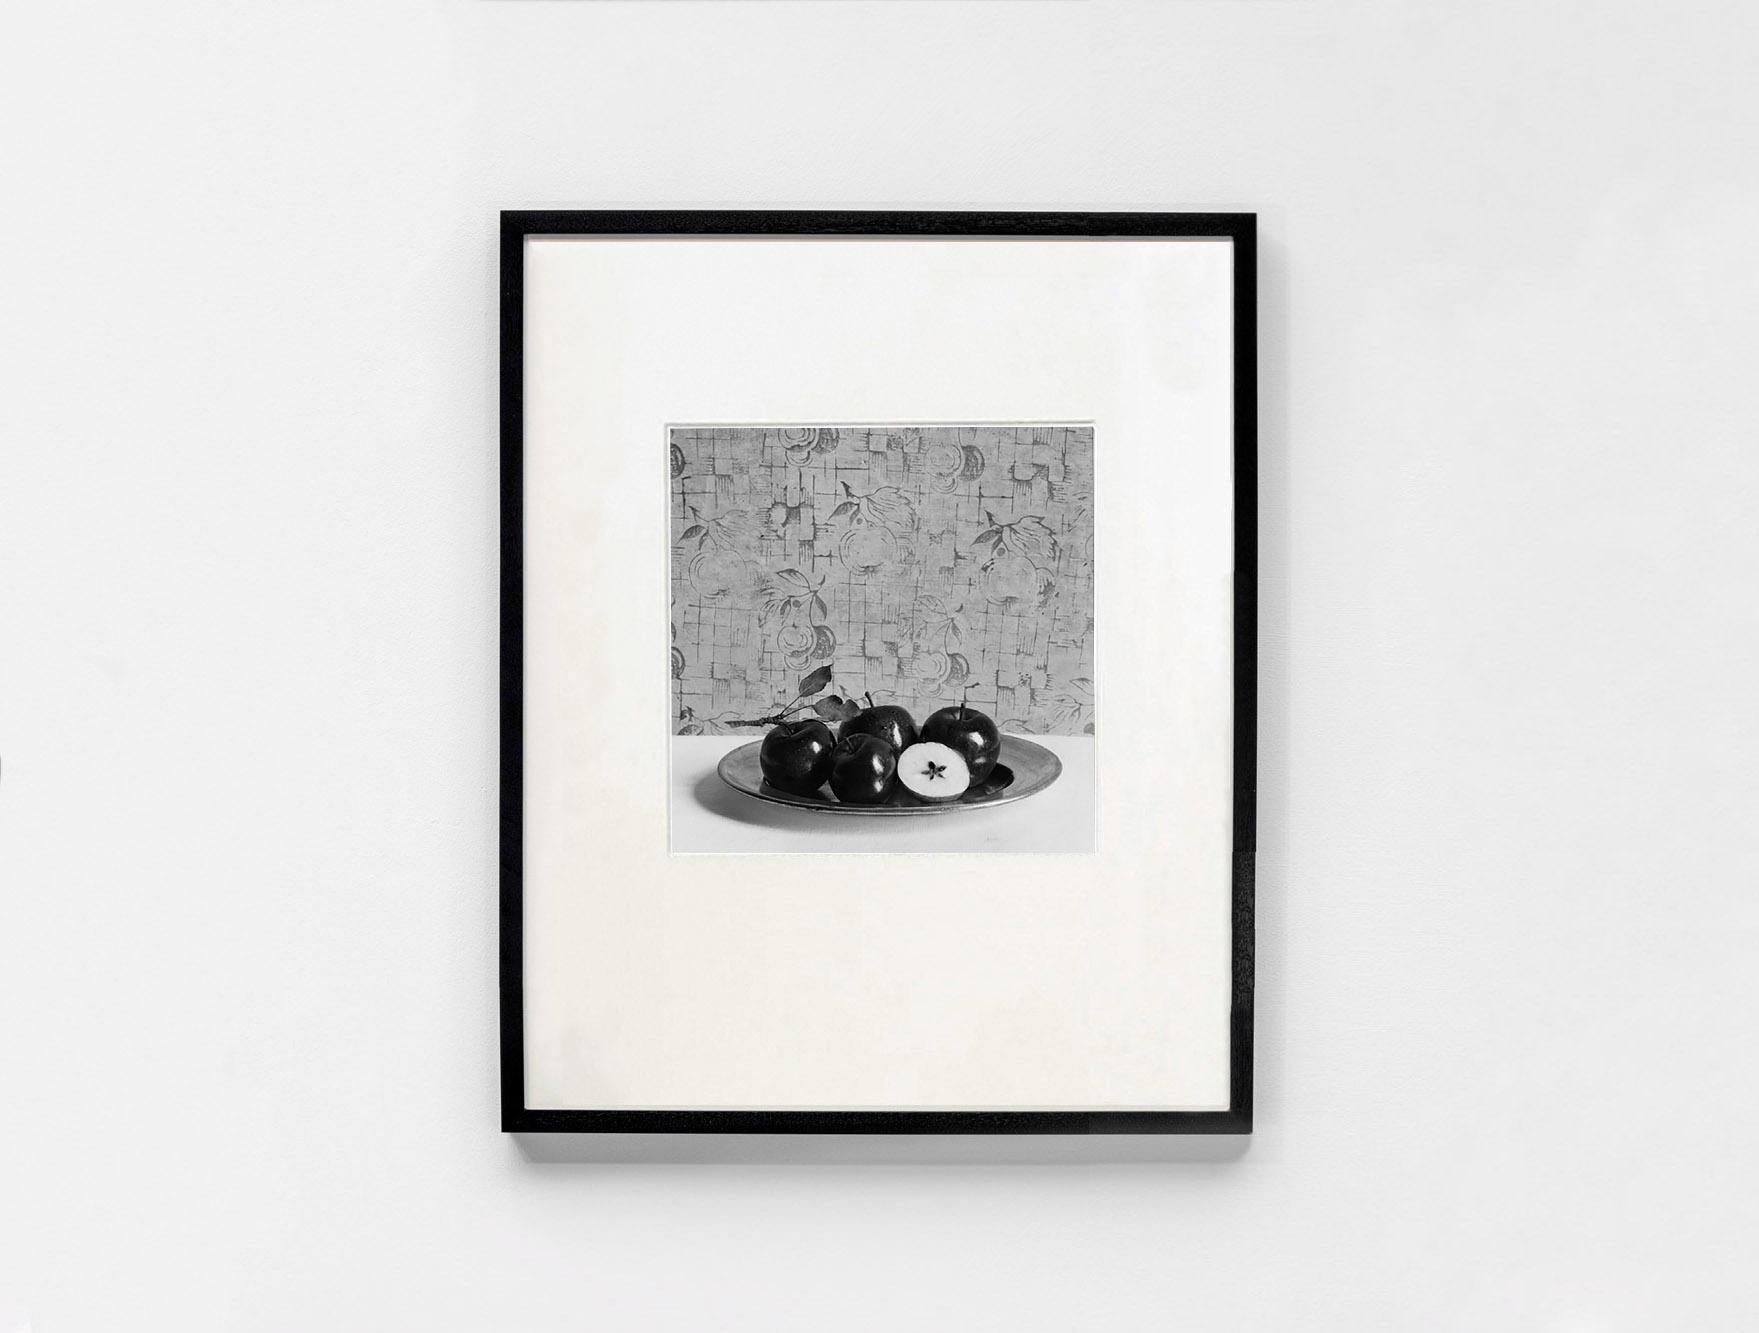 Abuelita II, Suiza, 2008 - Flor Garduño (Black and White Photography) For Sale 1